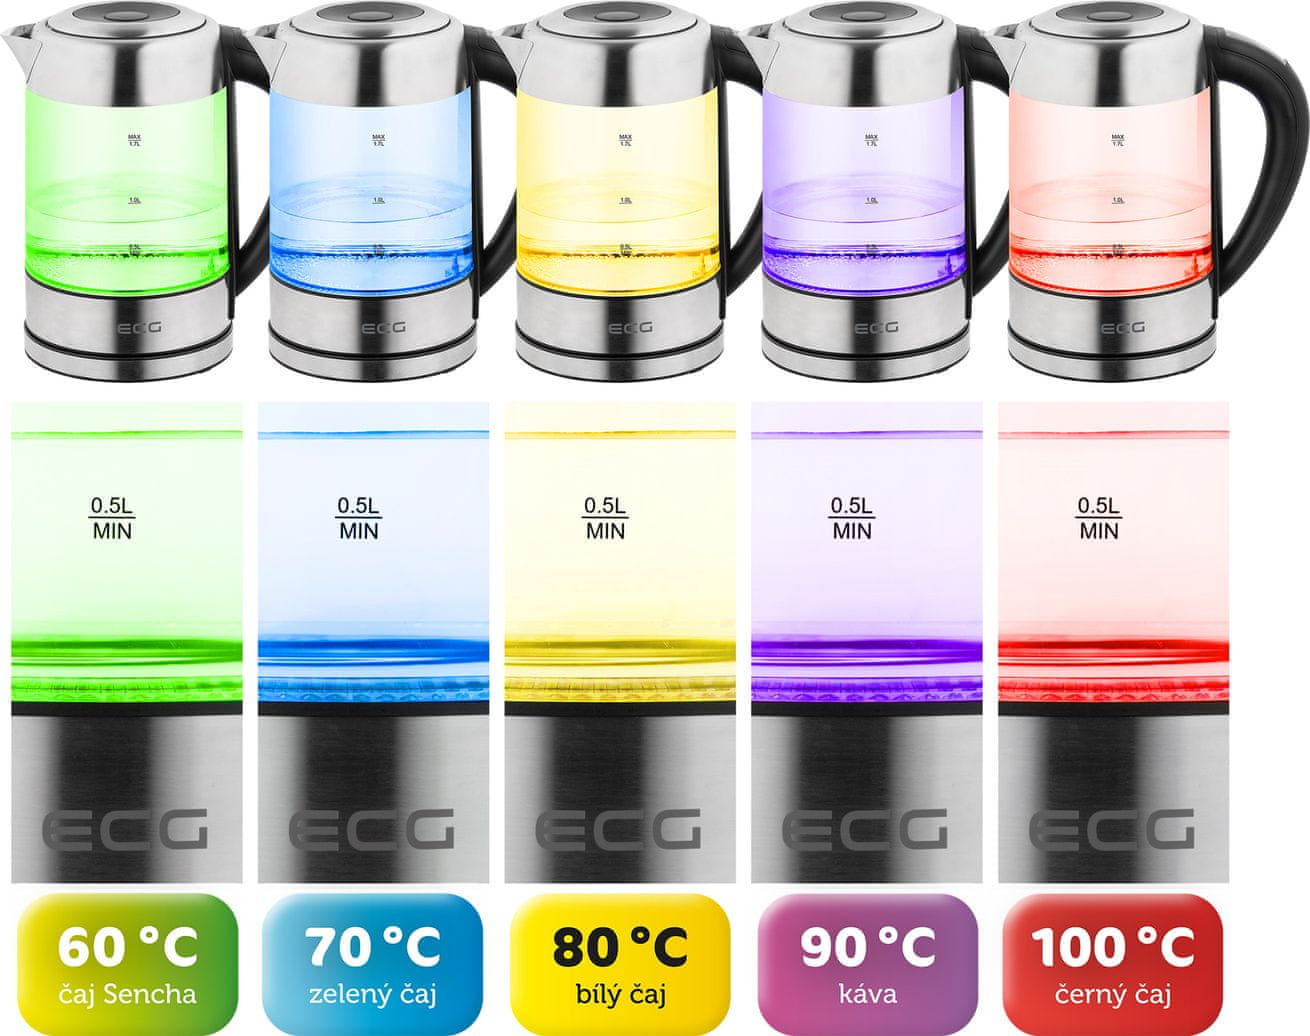  ECG RK 1777 Colore teploty